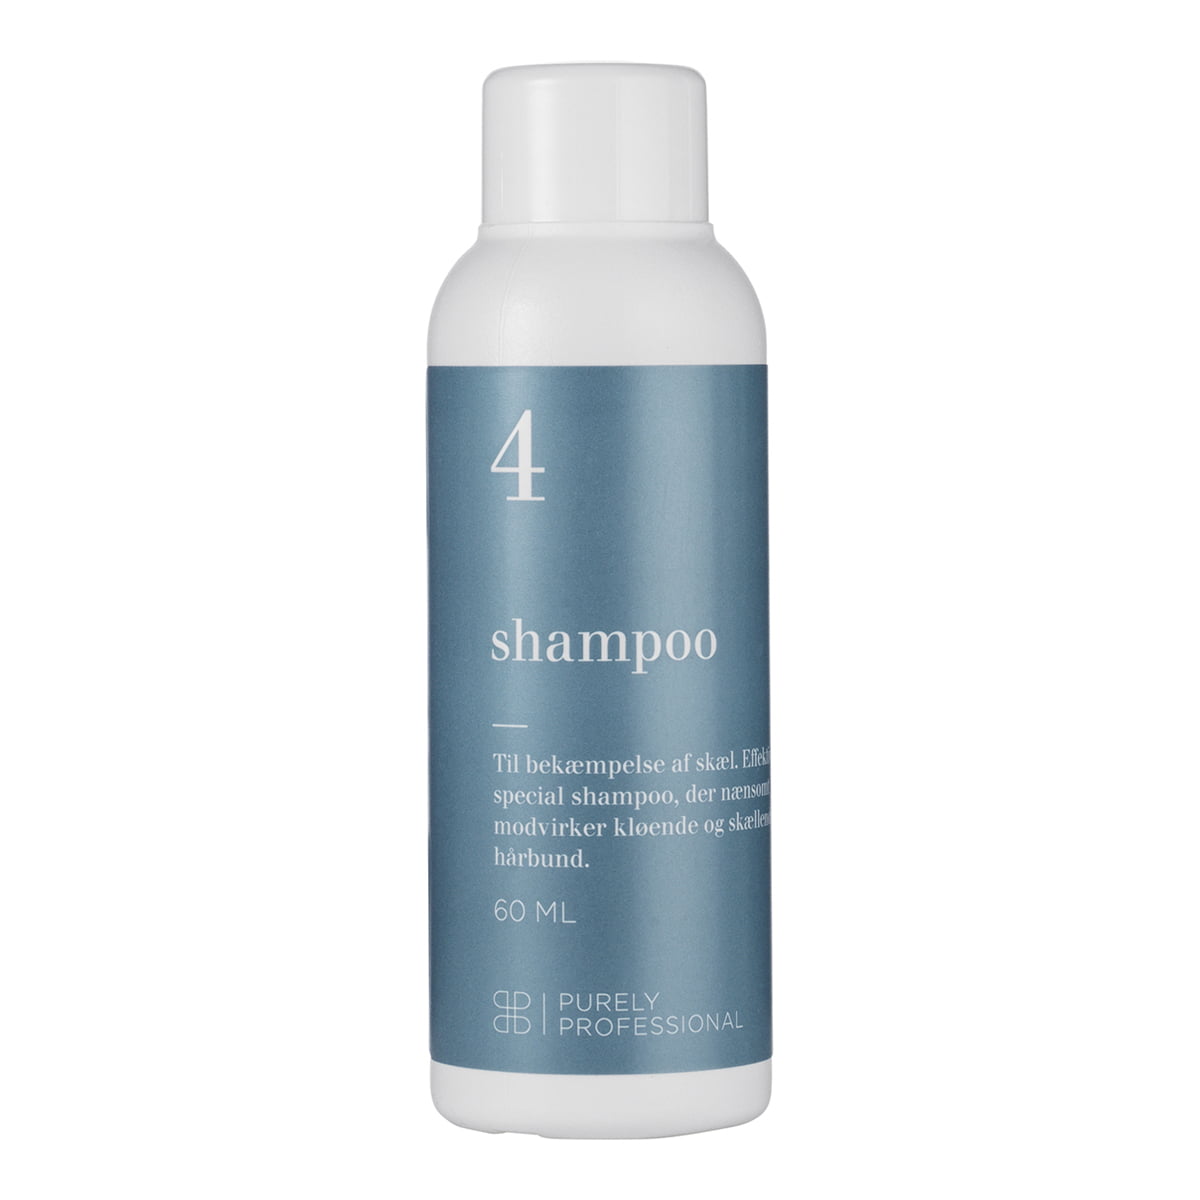 shampoo 4 - 60 ml